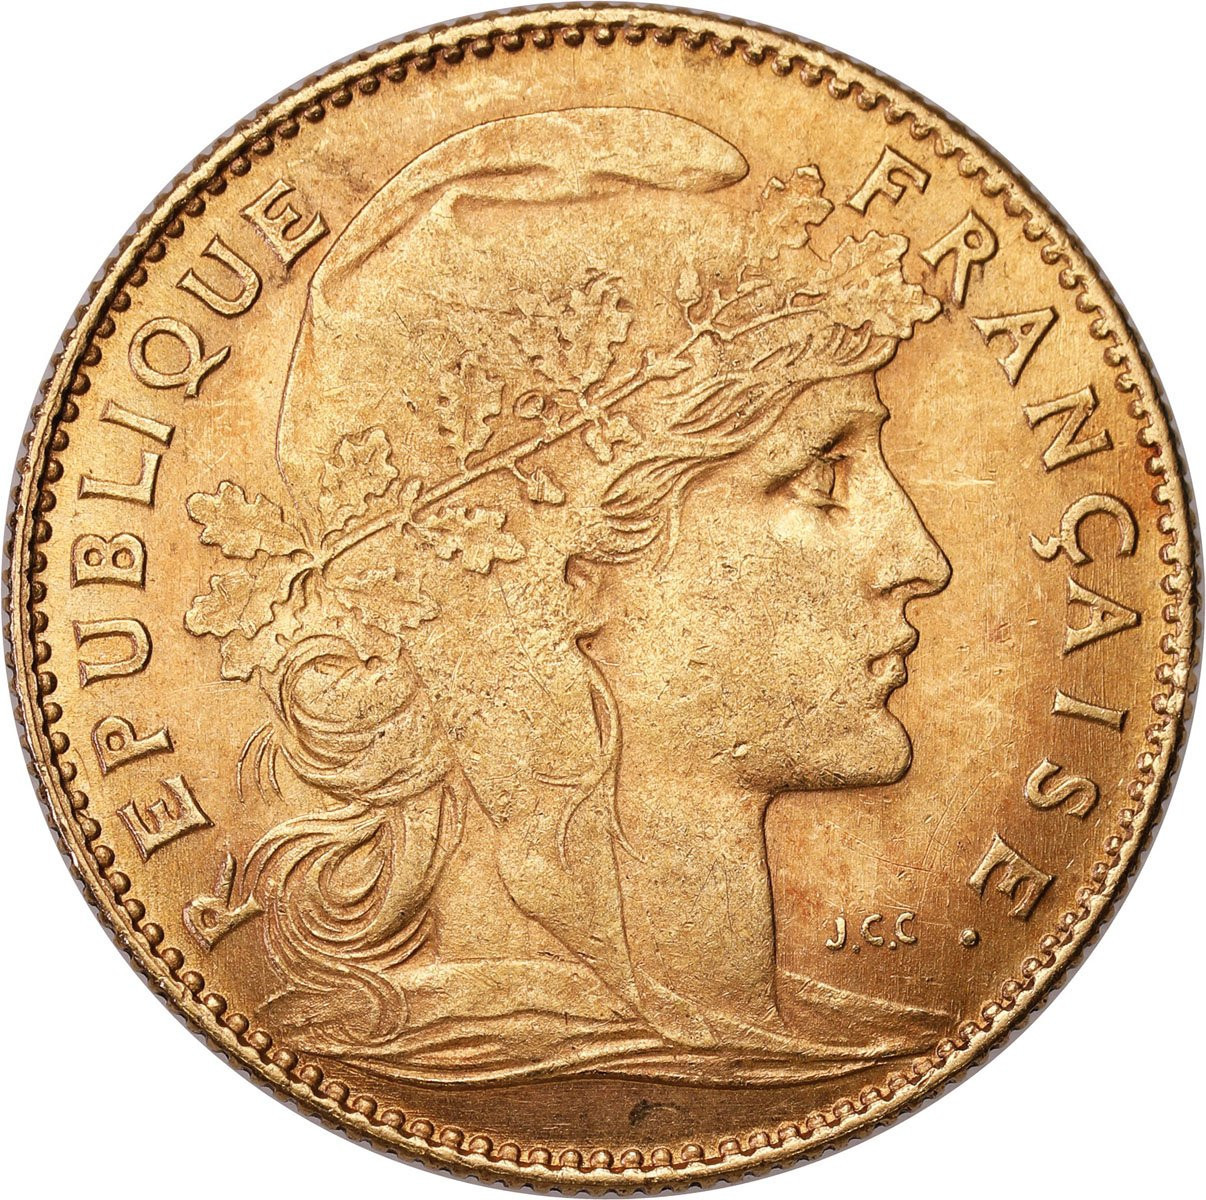 Francja. 10 franków 1910 Kogut